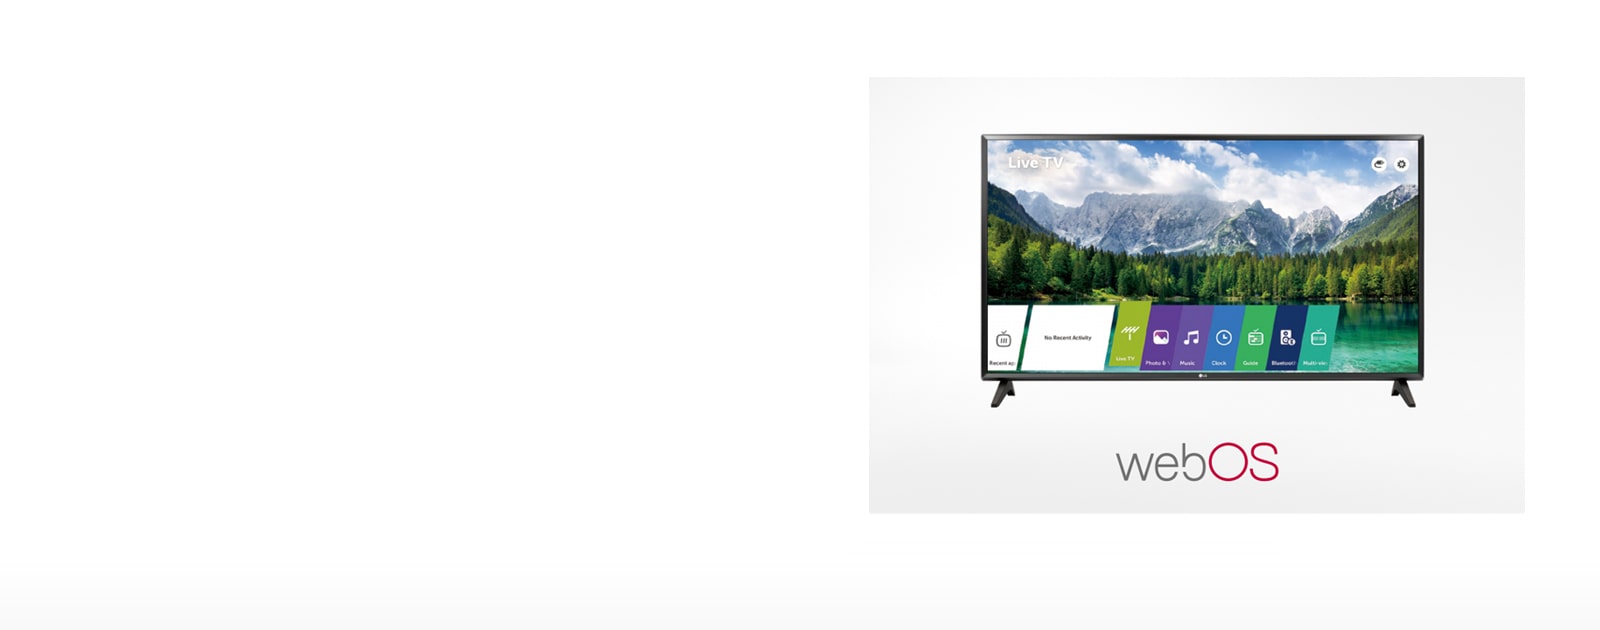 Smart TV của LG webOS 4.51